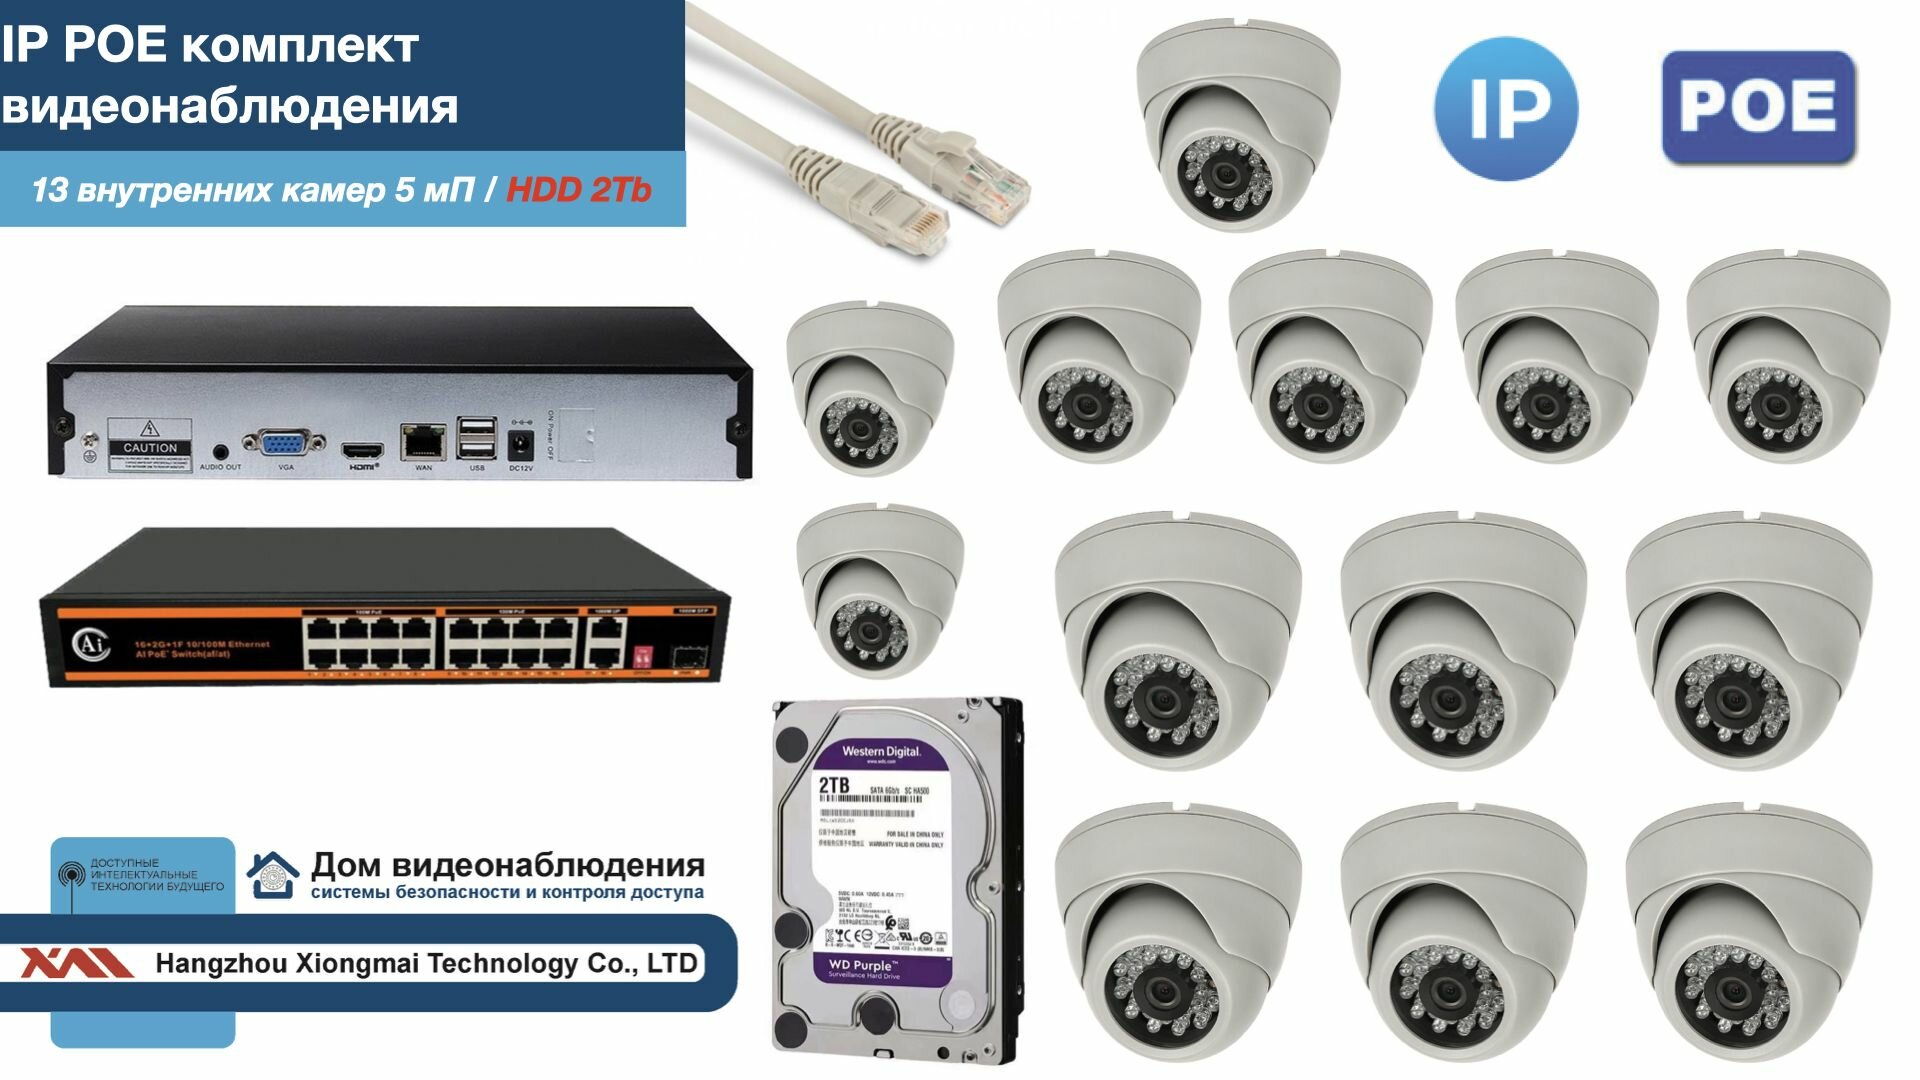 Полный IP POE комплект видеонаблюдения на 13 камер (KIT13IPPOE300W5MP-HDD2Tb)